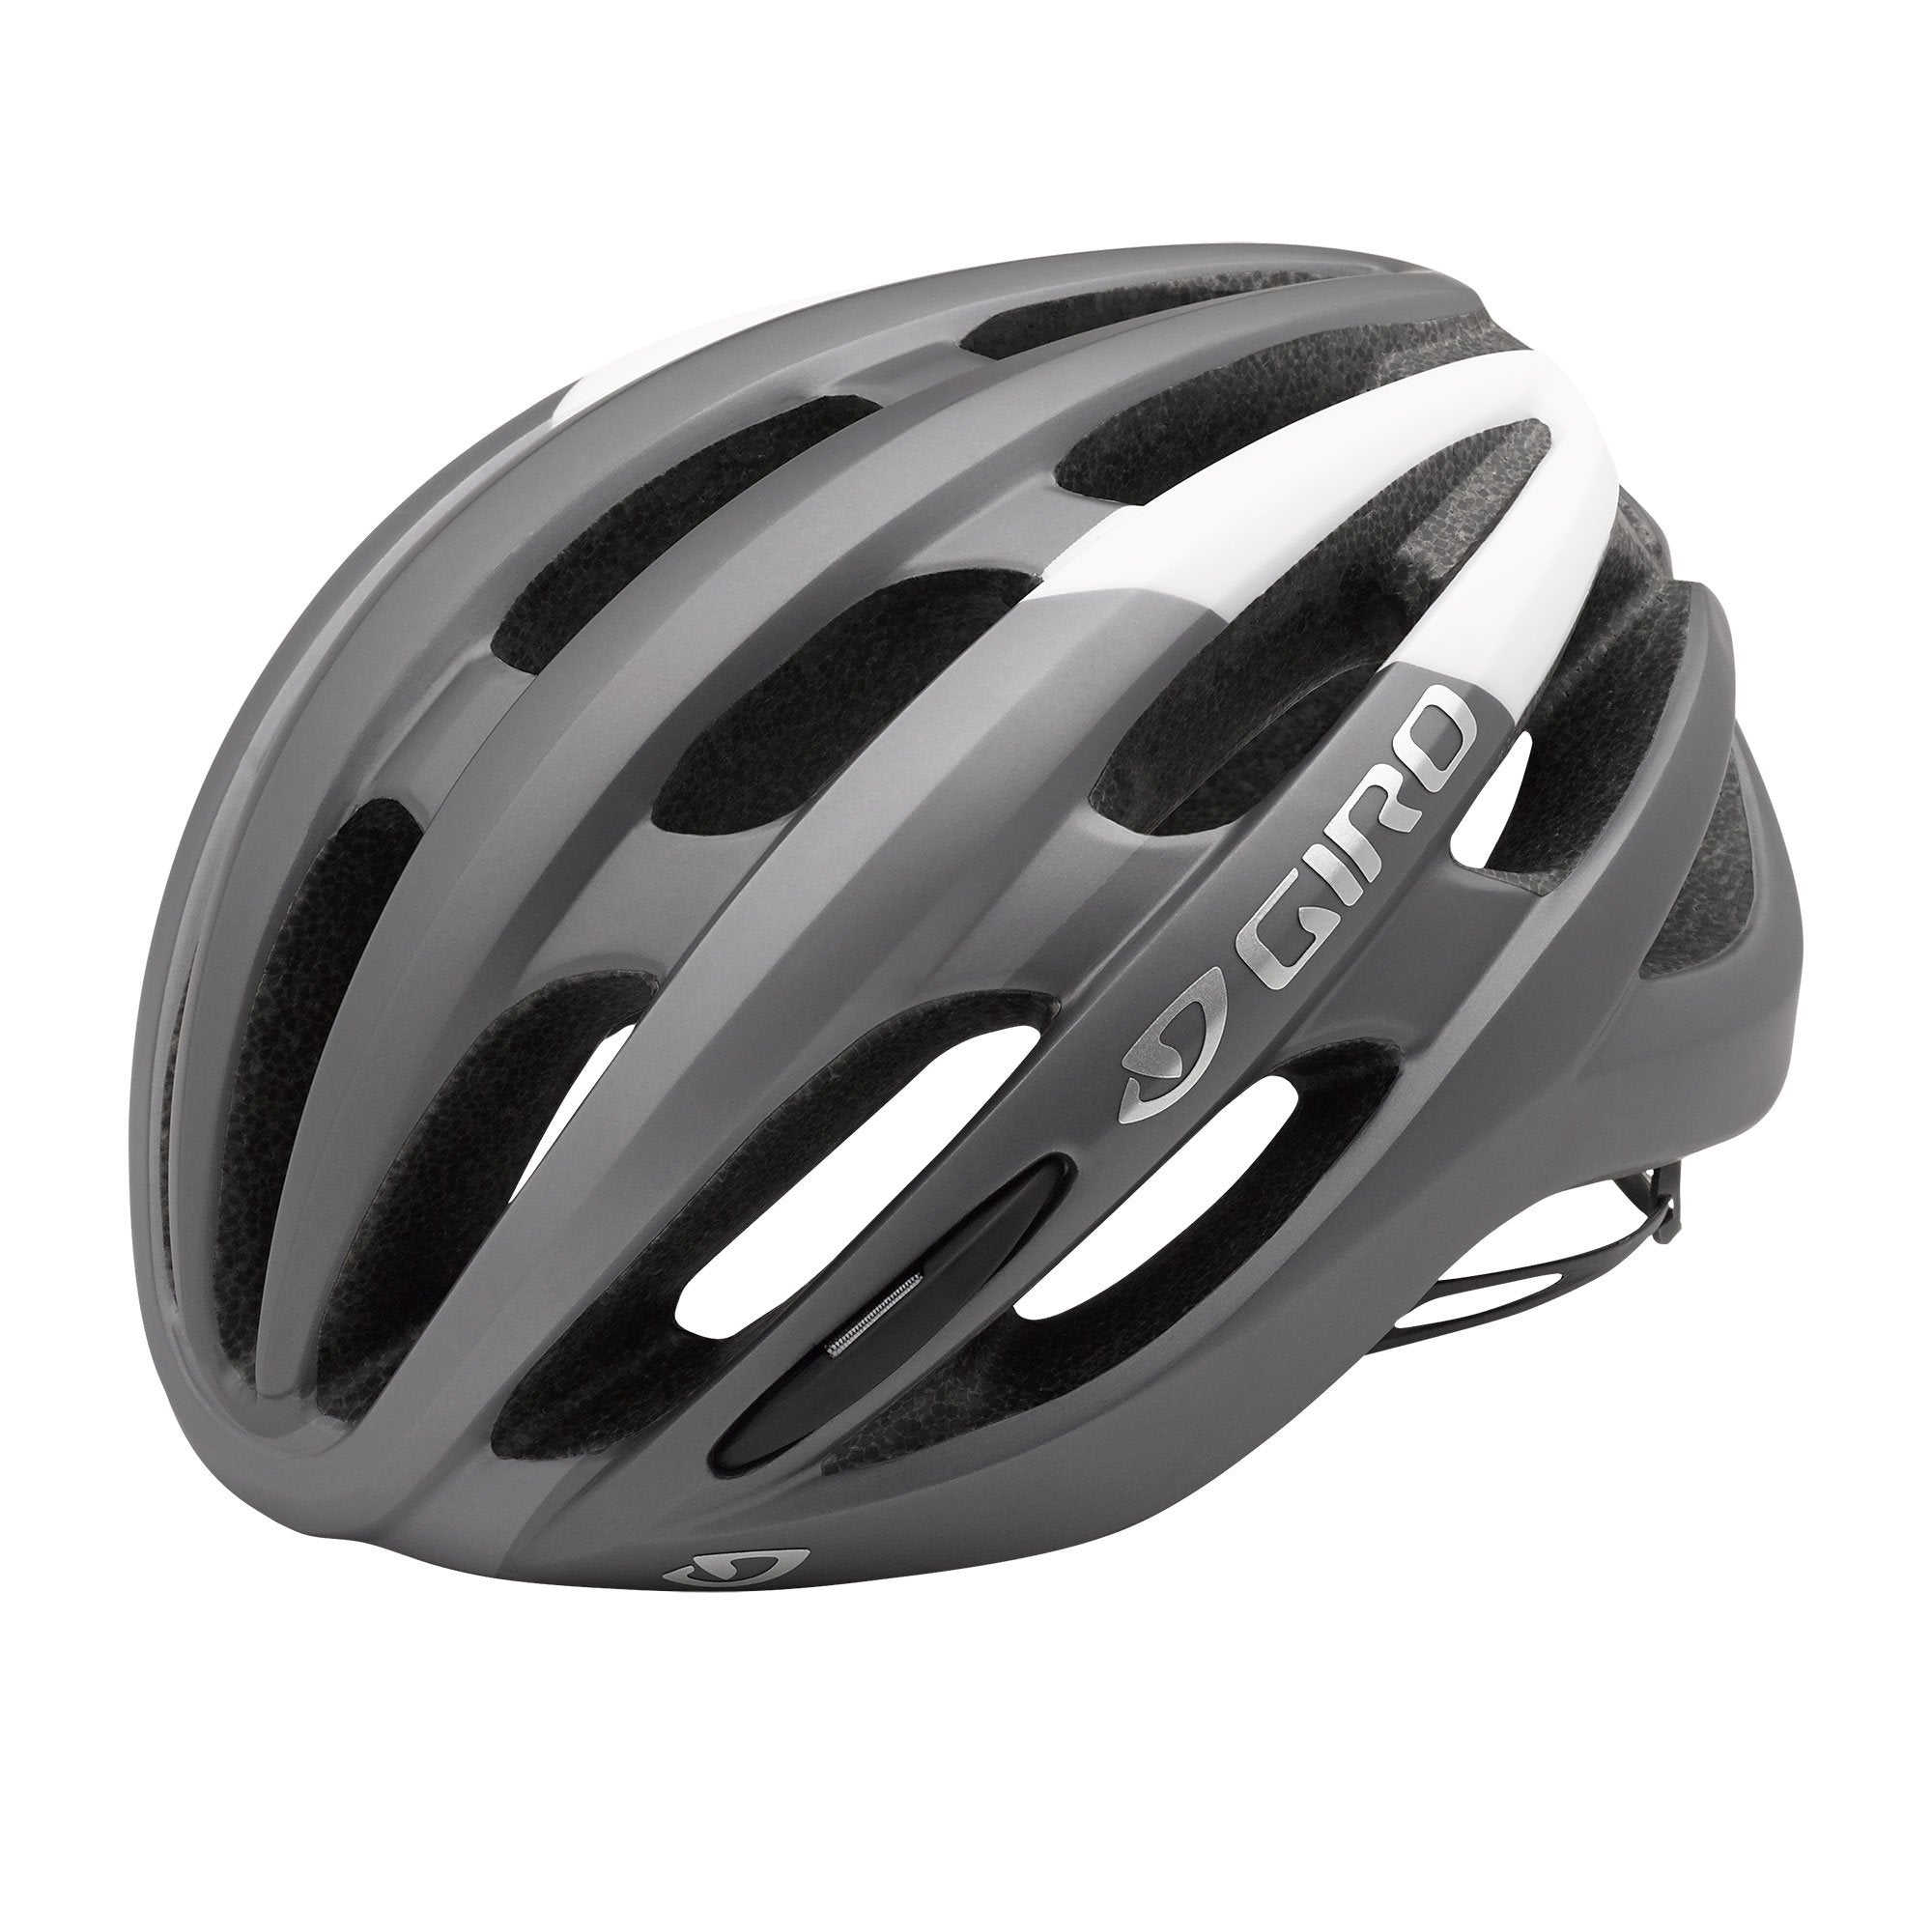 Giro Foray MIPS Adult Road Cycling Helmet - Small (51-55 cm), Matte Titanium/White (2019)  - Like New